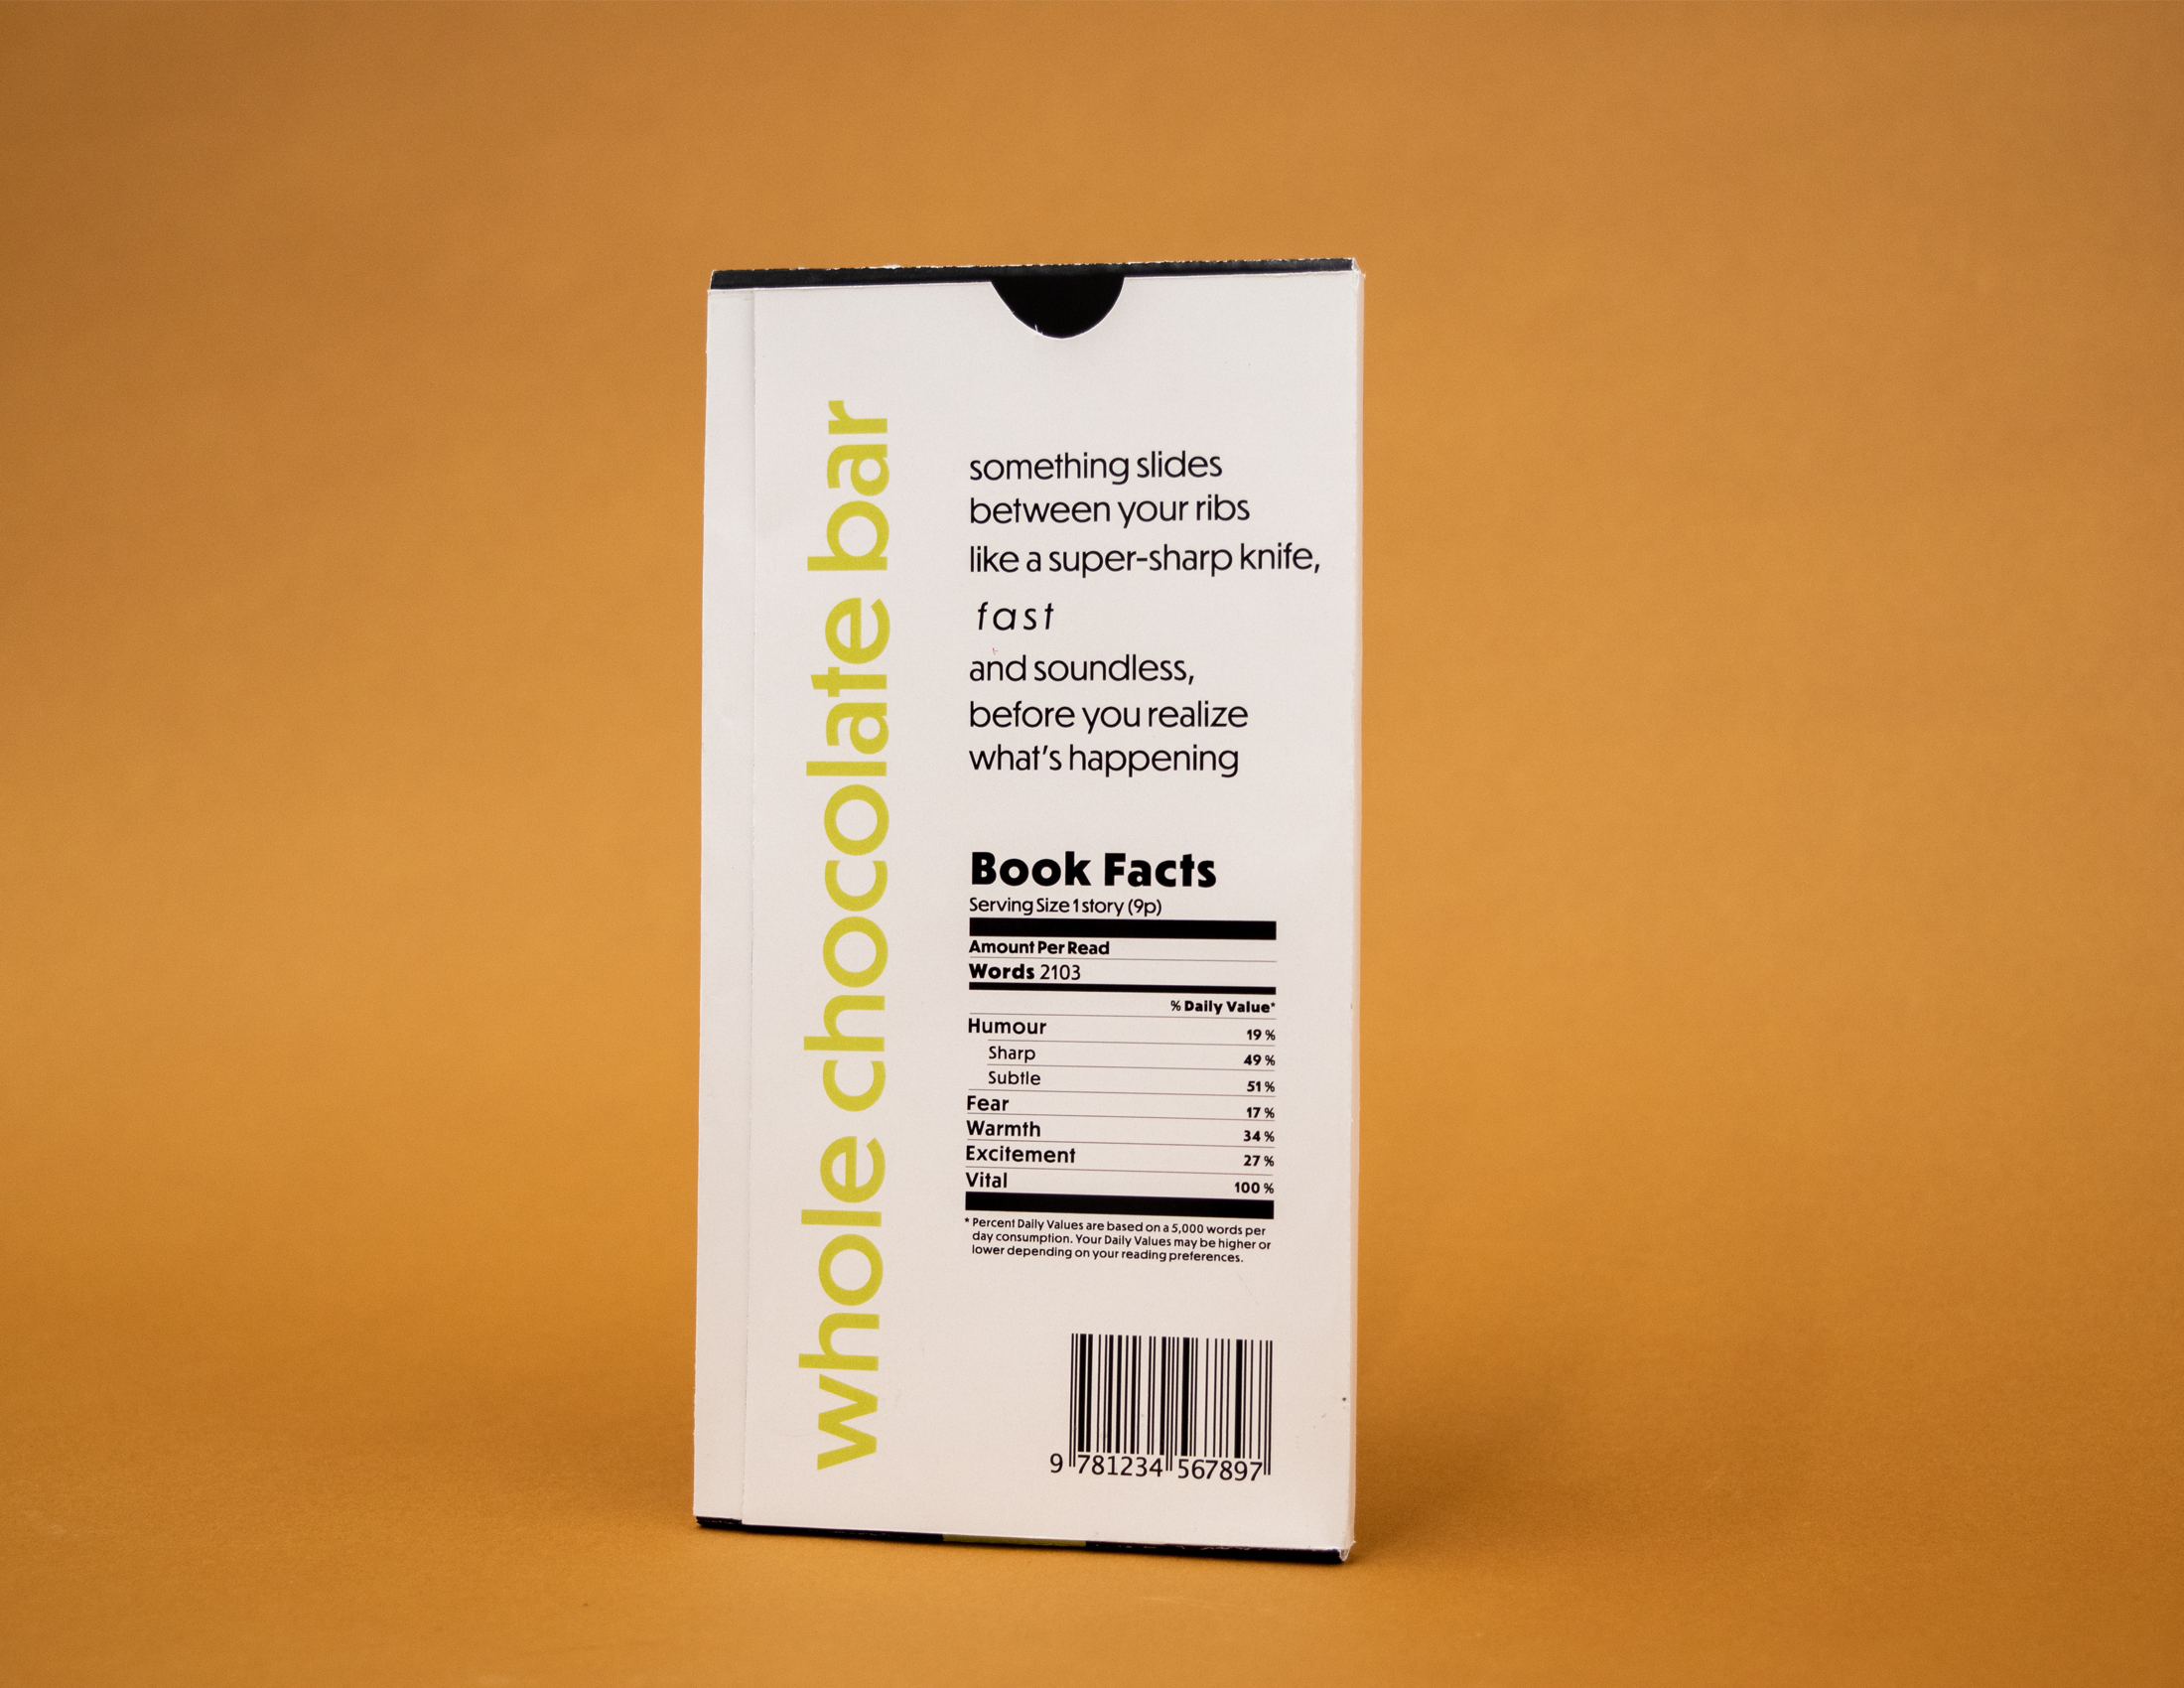 2022 MacEwan Book of the Year - Chocolate Bar - Image 3